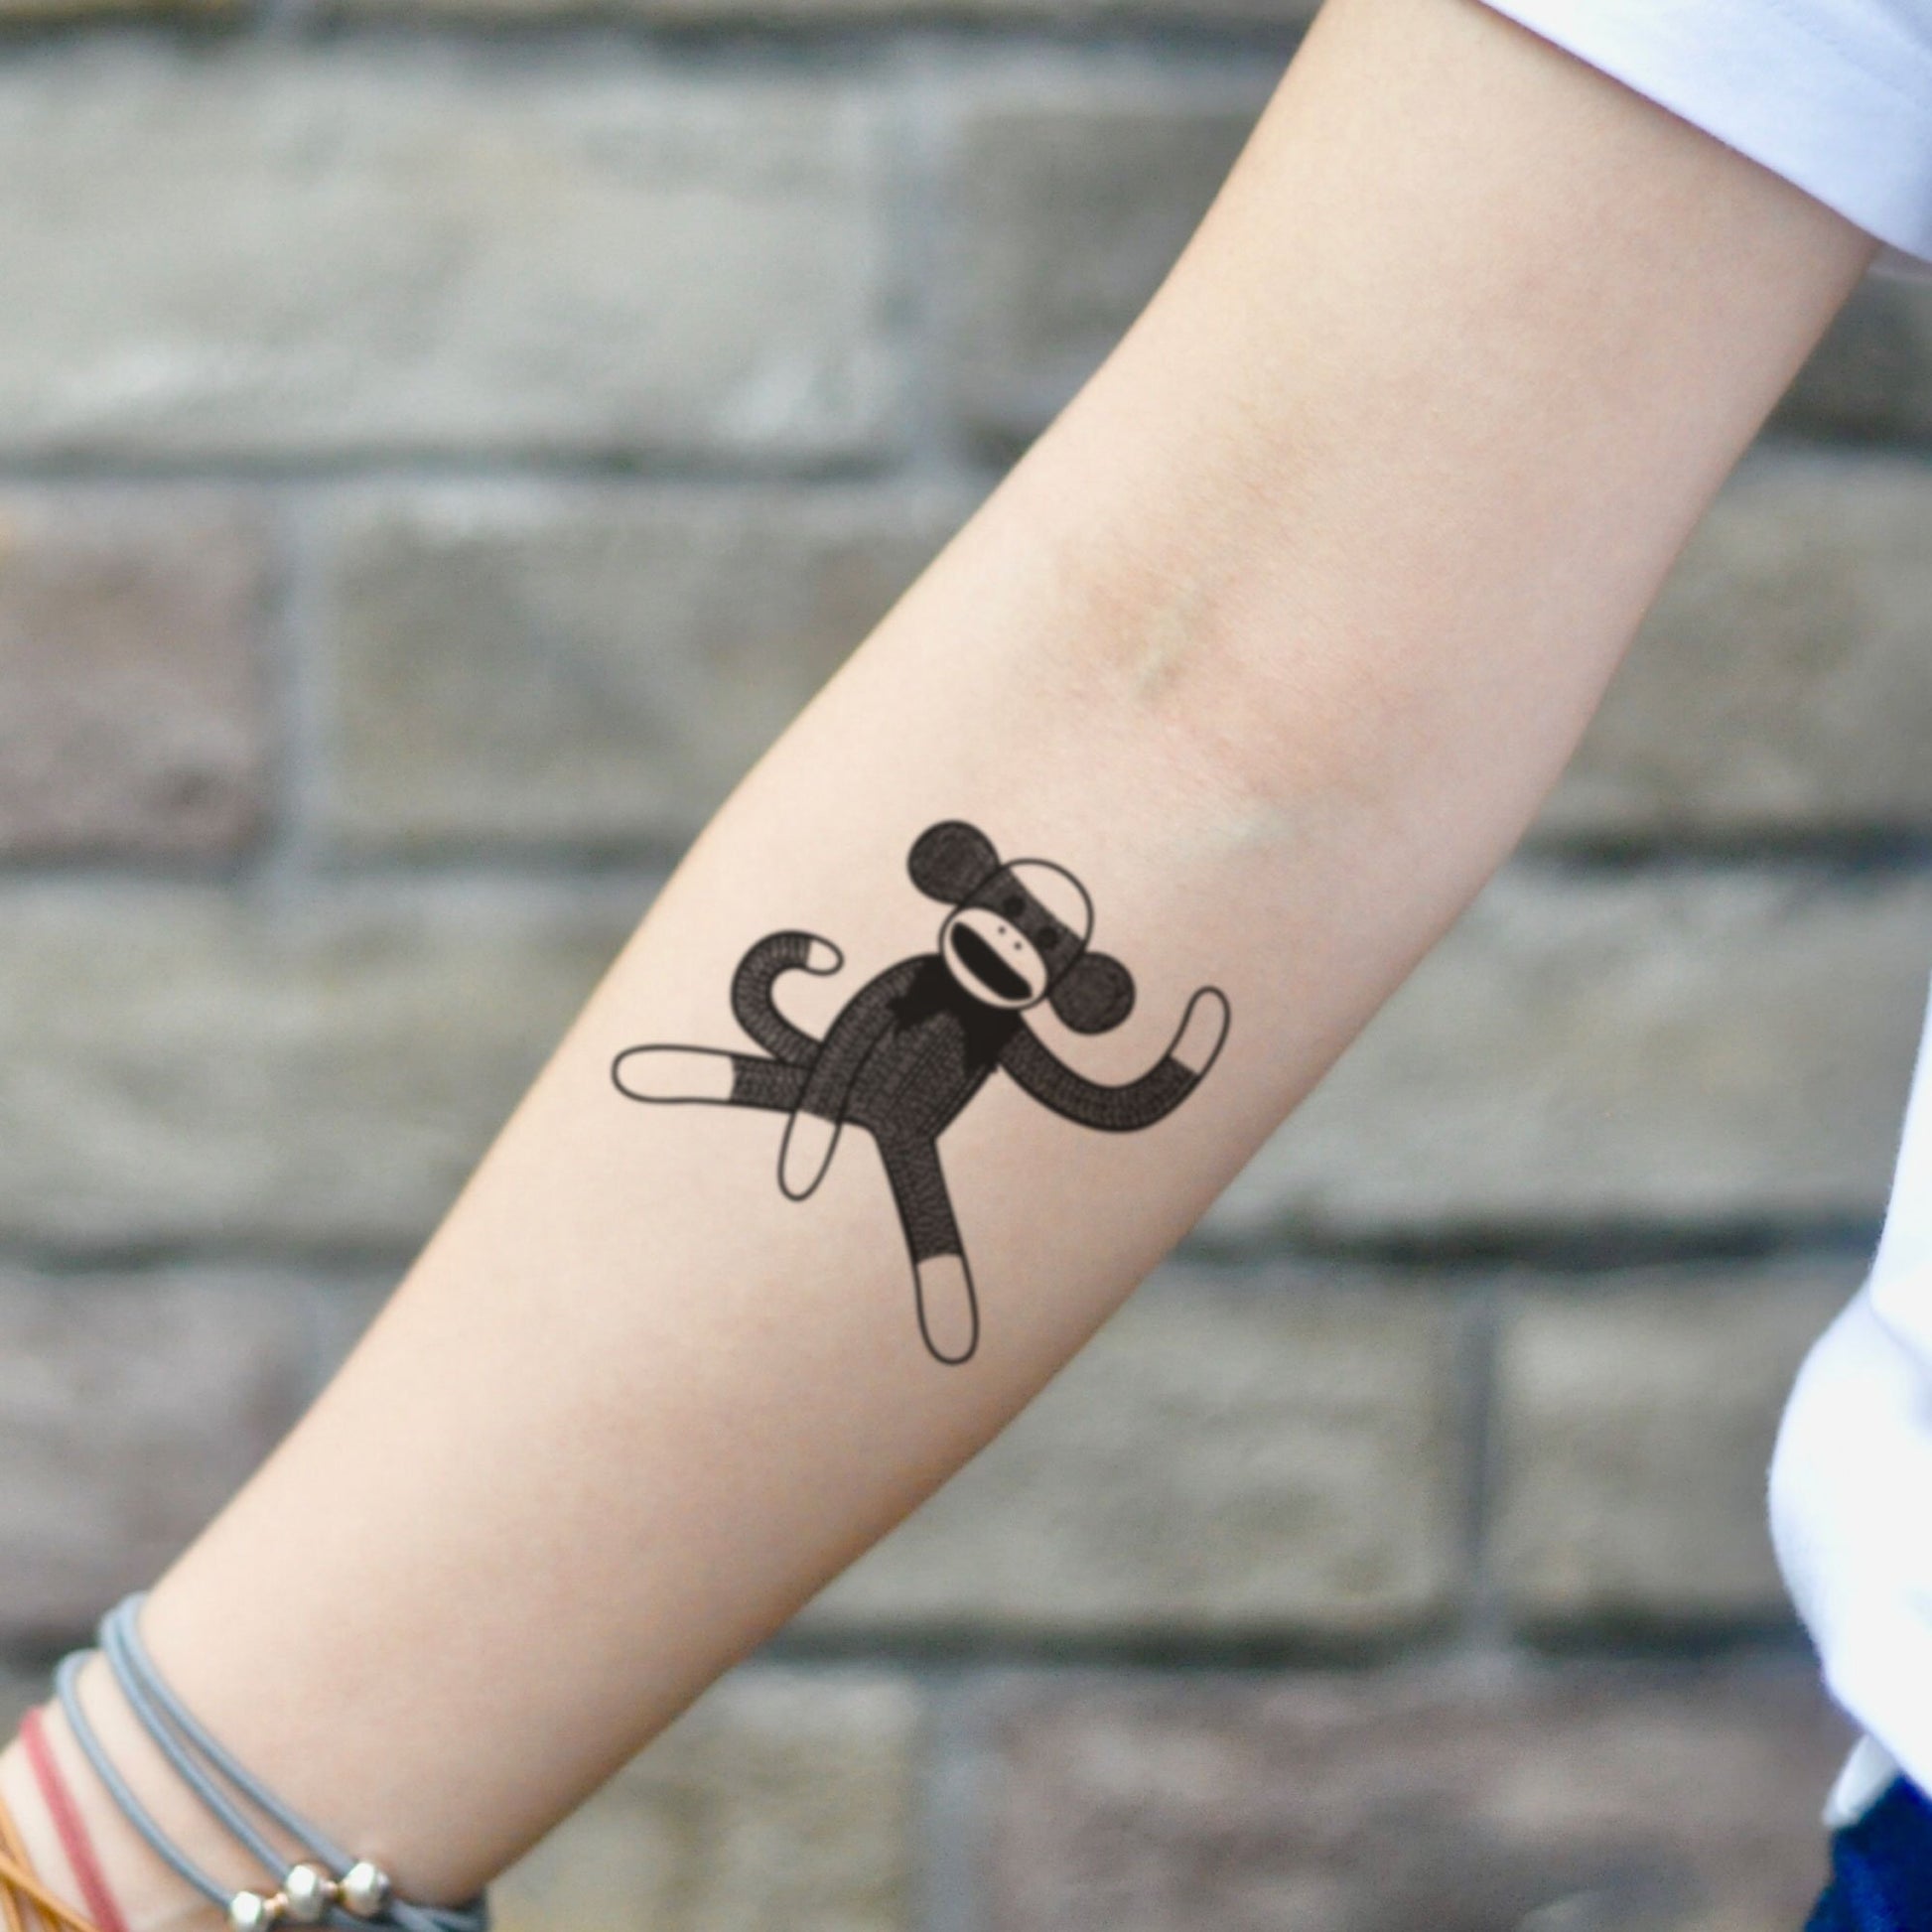 fake small sock monkey illustrative temporary tattoo sticker design idea on inner arm